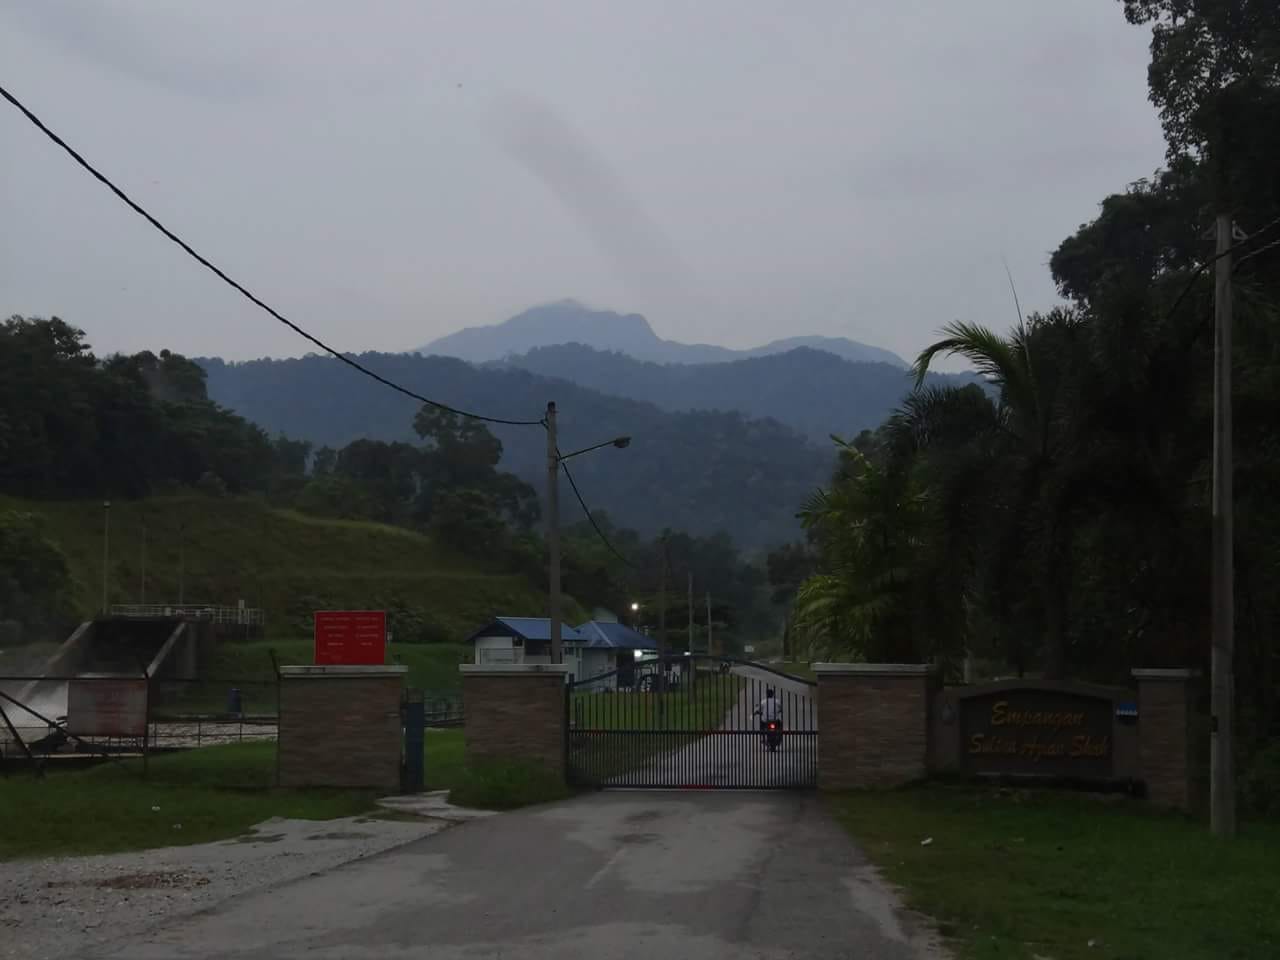 18 Gunung Korbu seens from entrance to Ulu Kinta dam